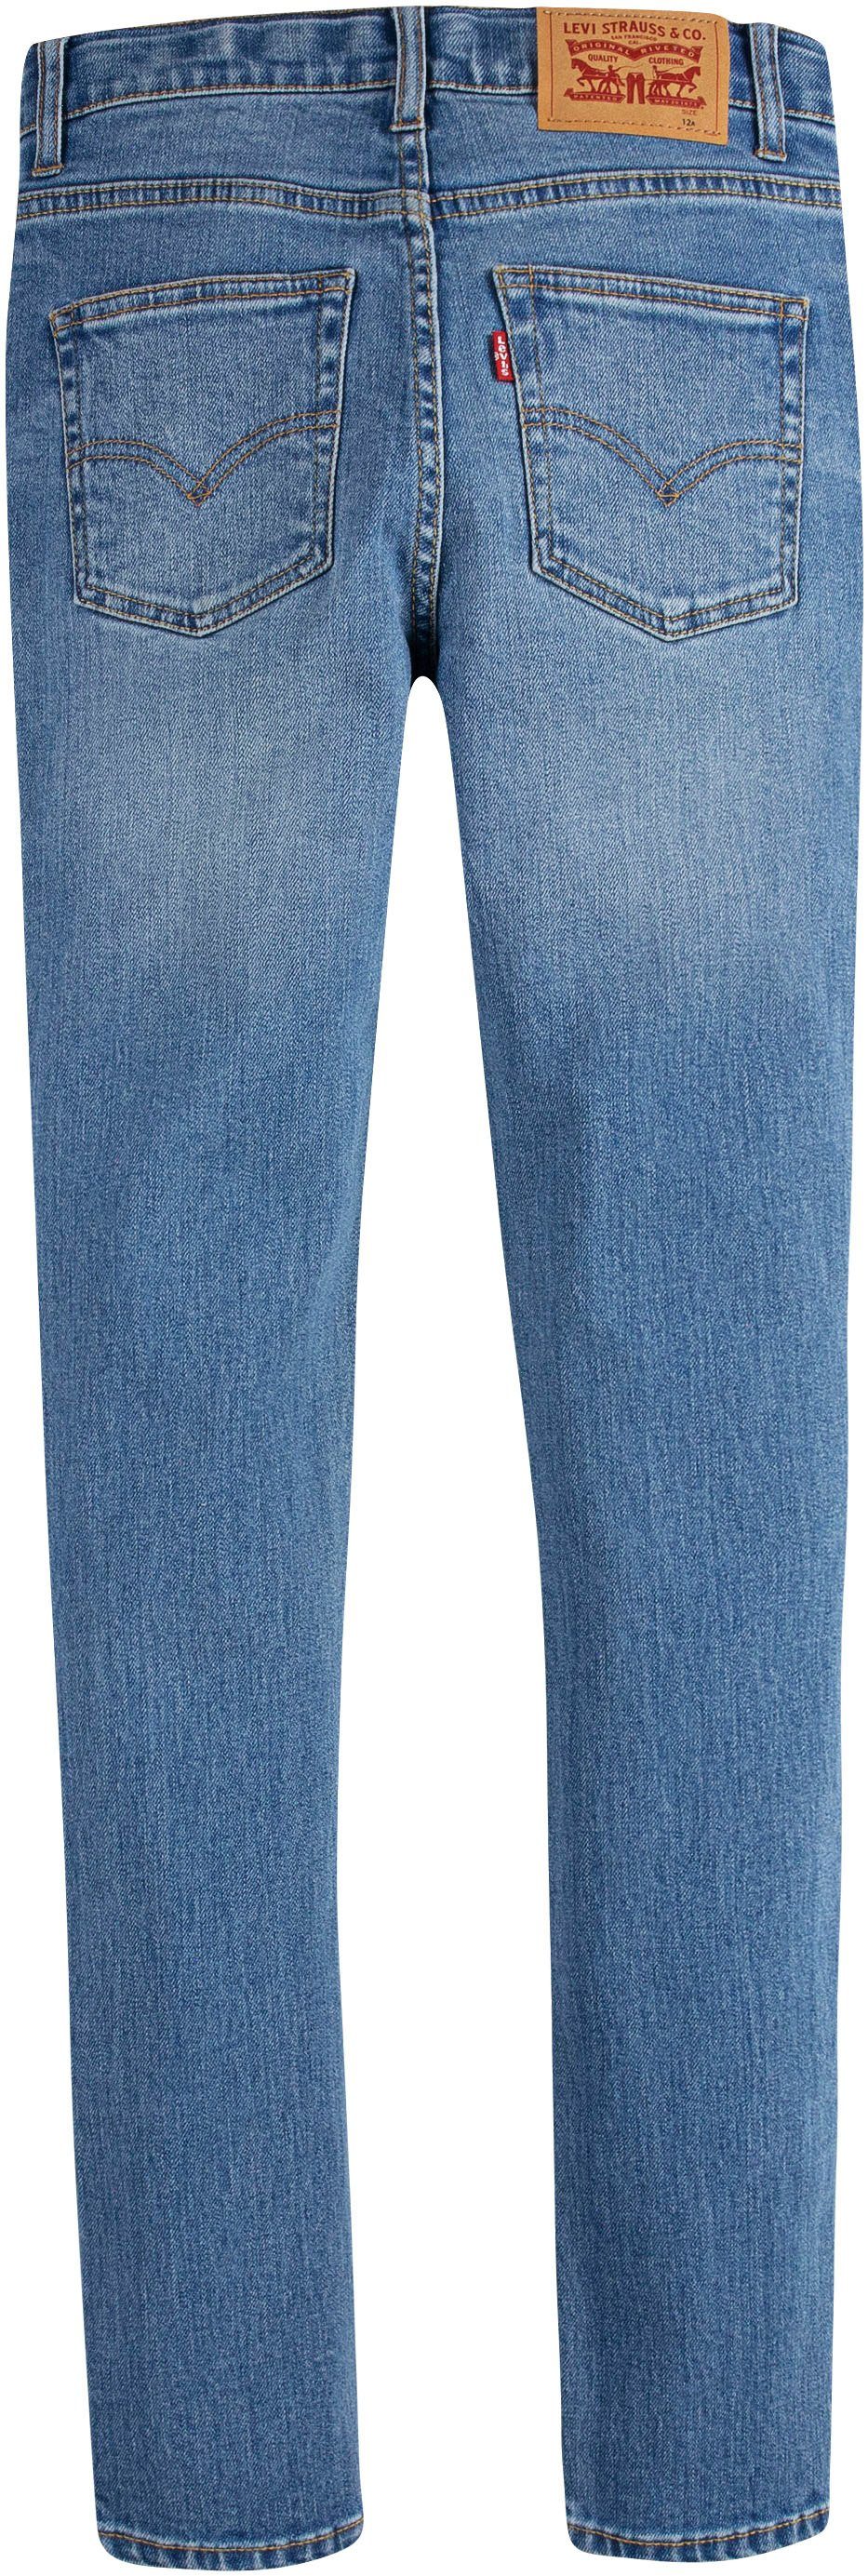 SKINNY Skinny-fit-Jeans TAPER BOYS blue Levi's® for denim used JEANS Kids